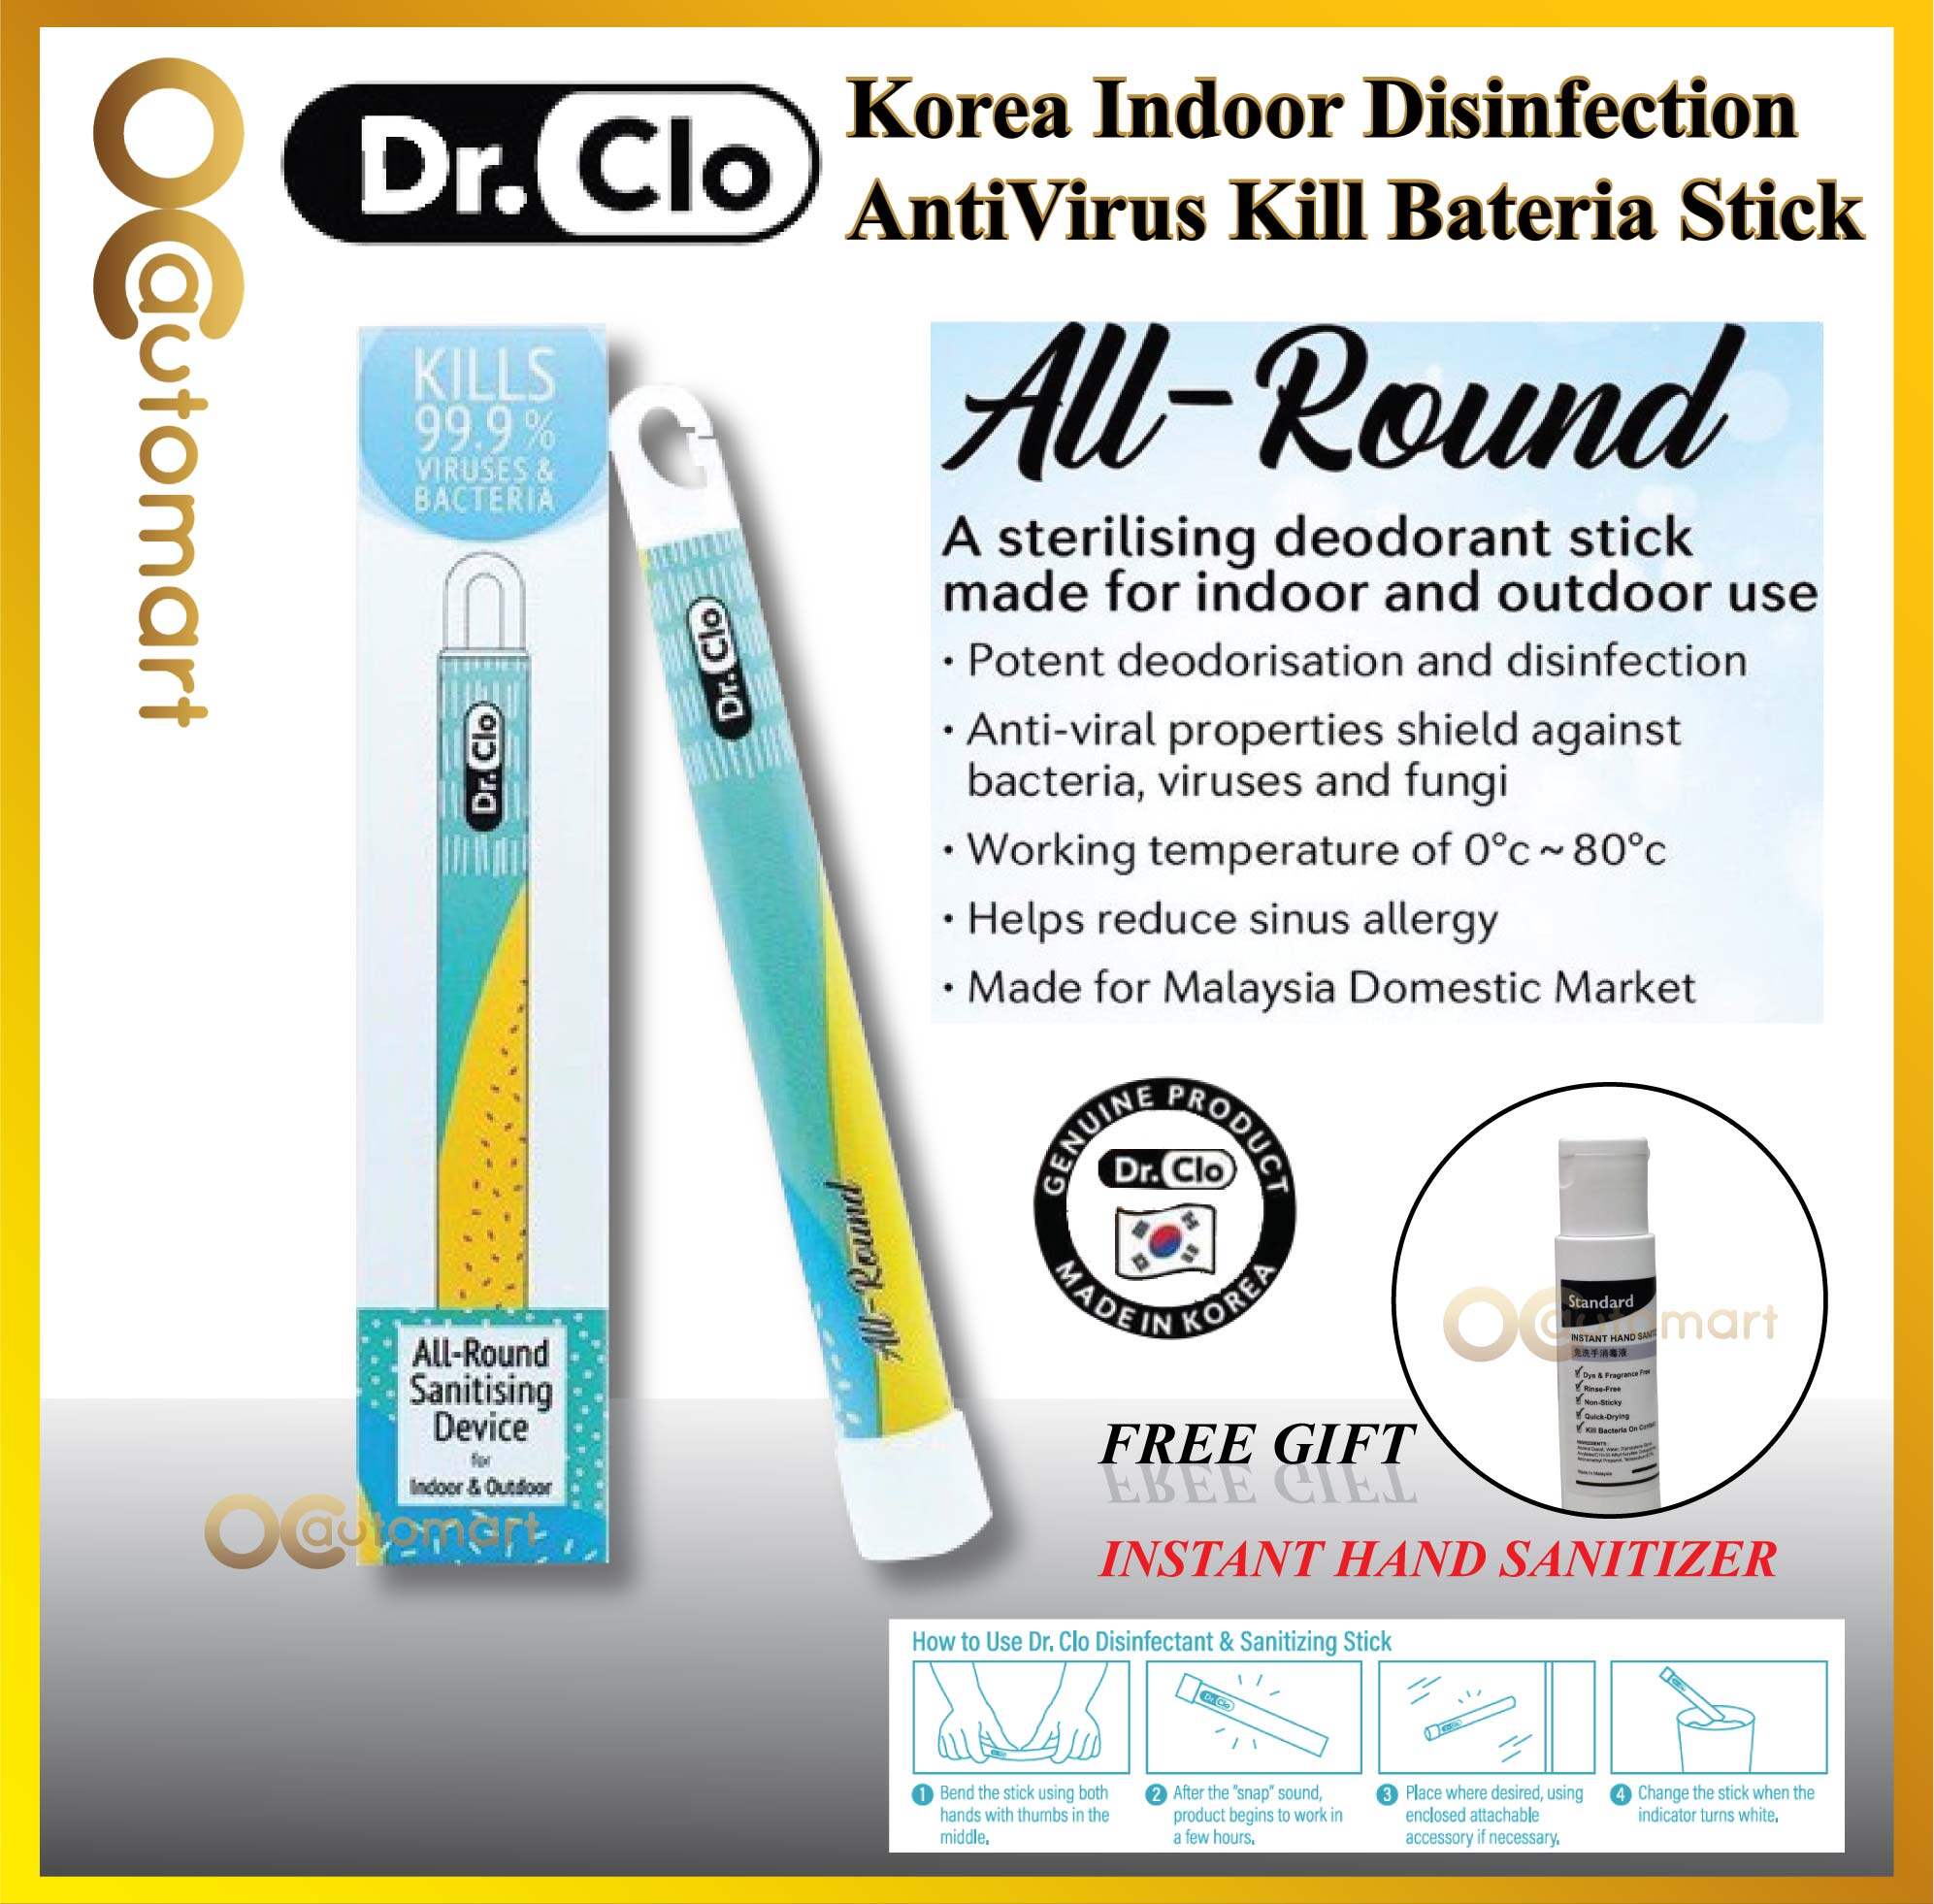 ORIGINALDr.Clo Korea Indoor Disinfection AntiVirus Kill Bateria Stick With FDA Certified Sanitizer & Free Gift